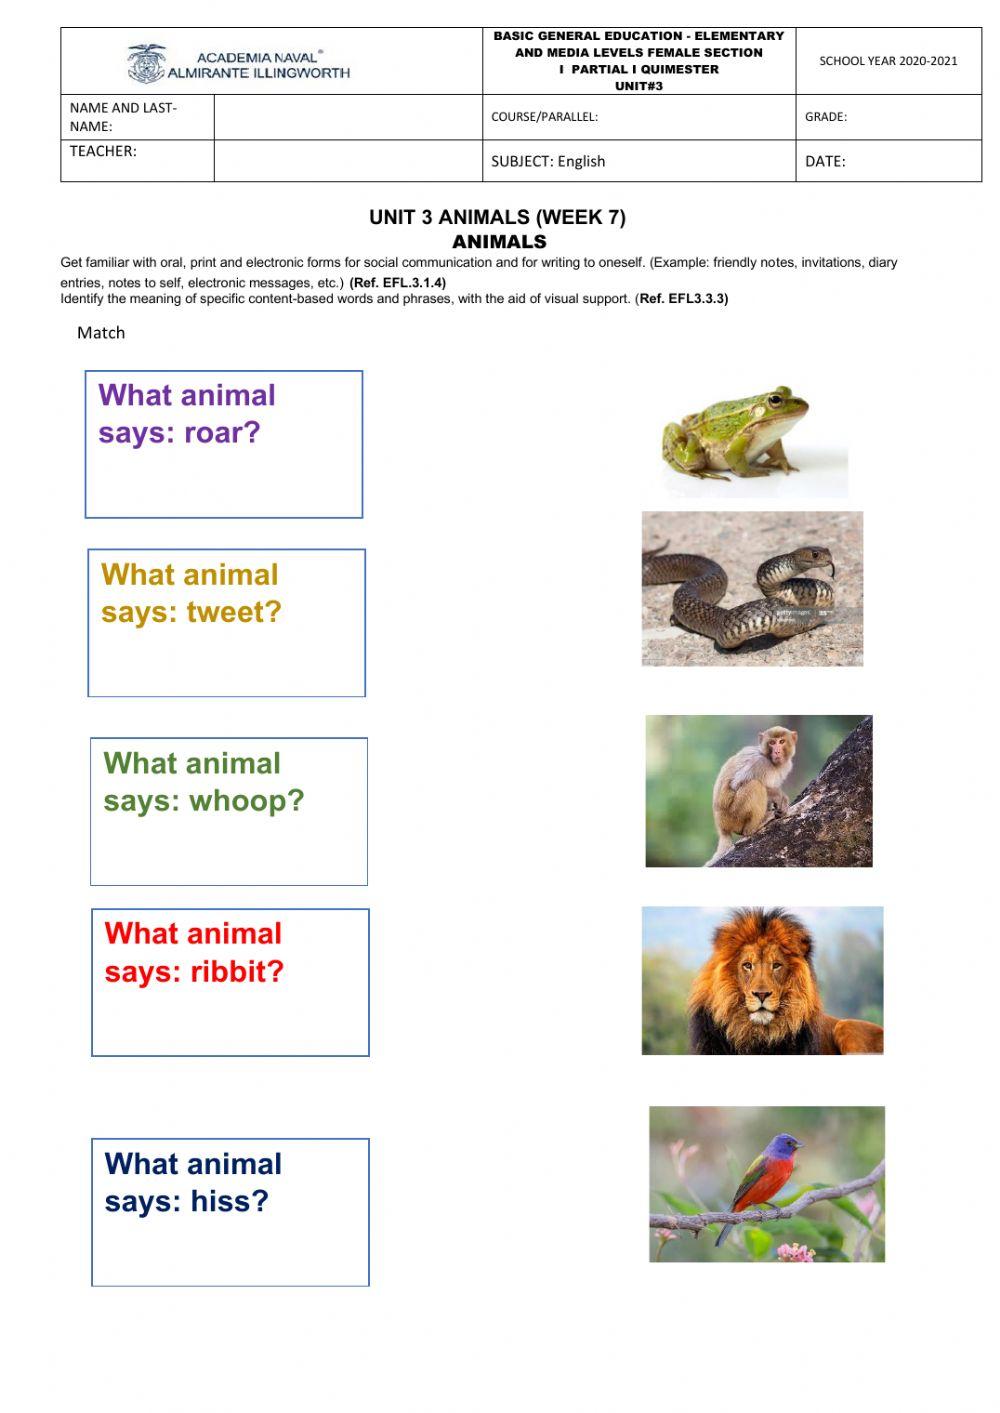 What animal says...?